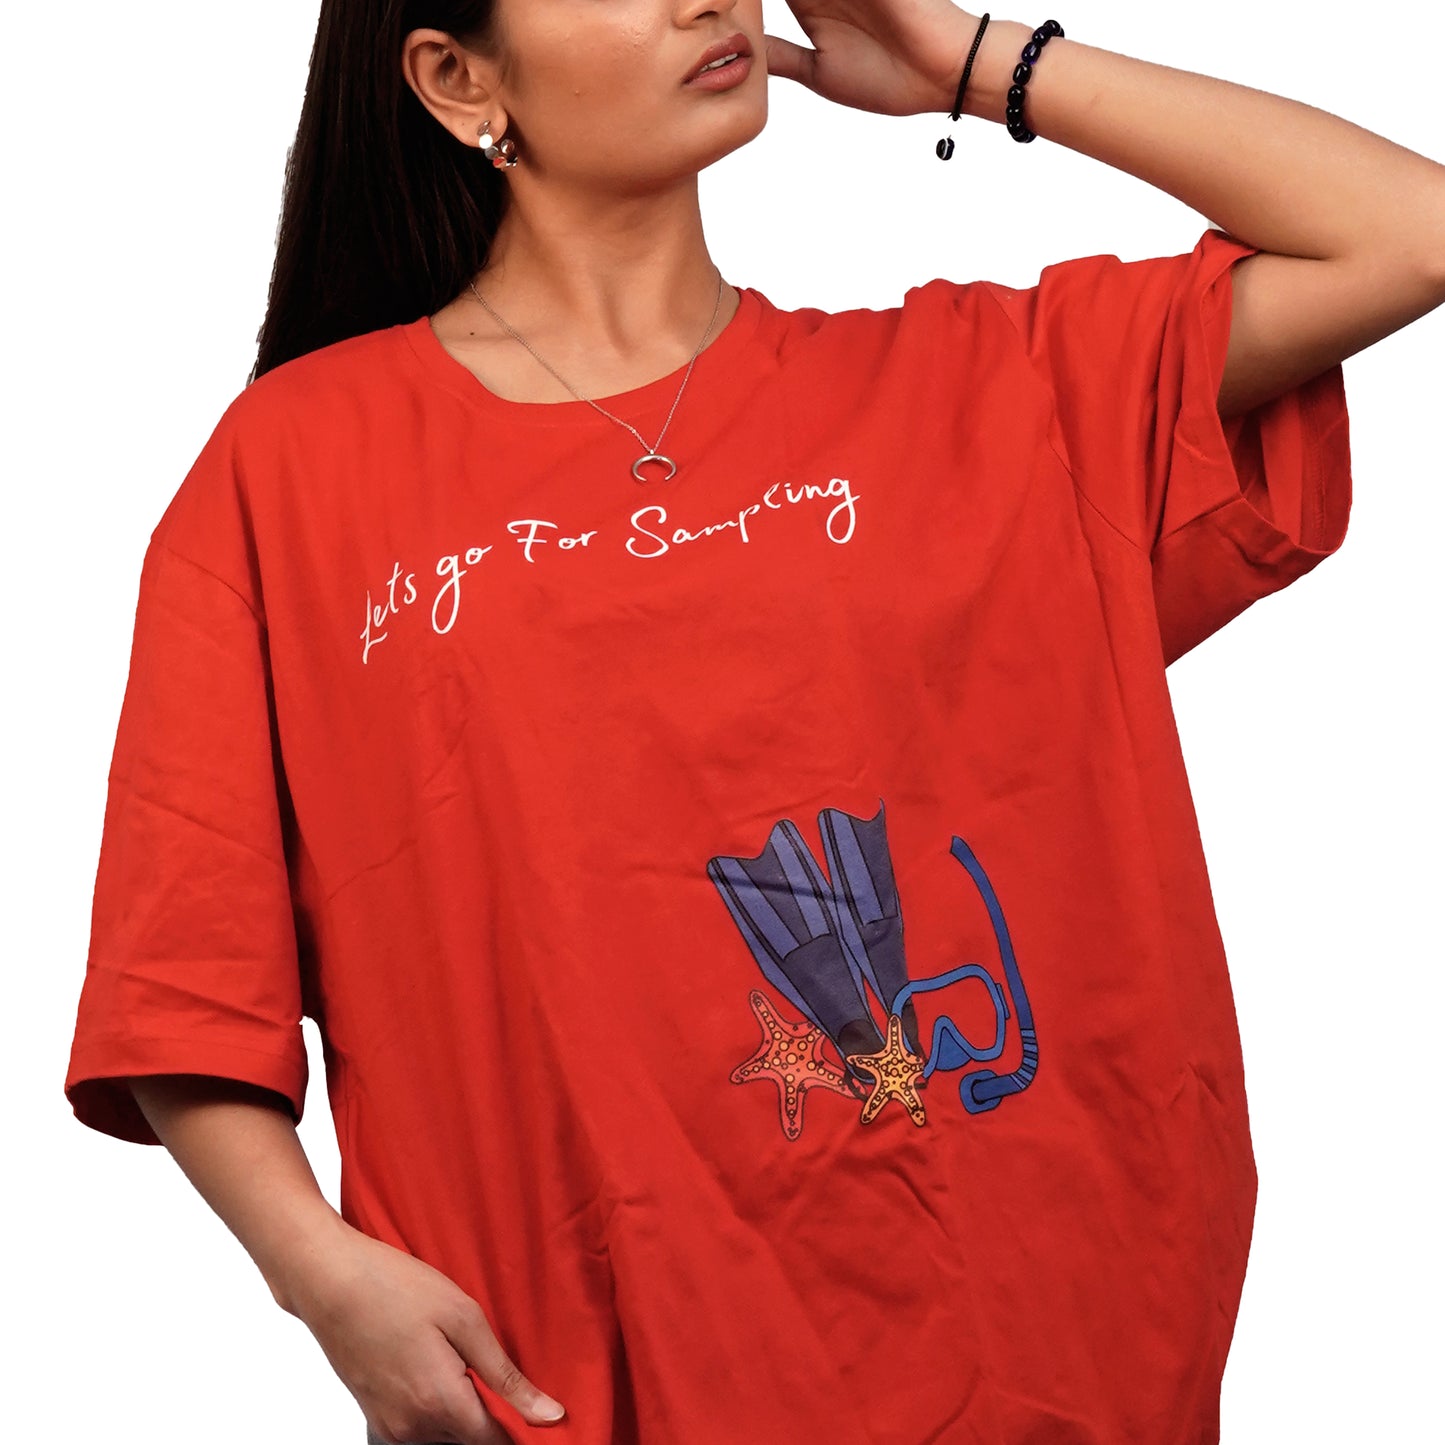 Let's Go For Sampling T-shirt In Red Color For Women